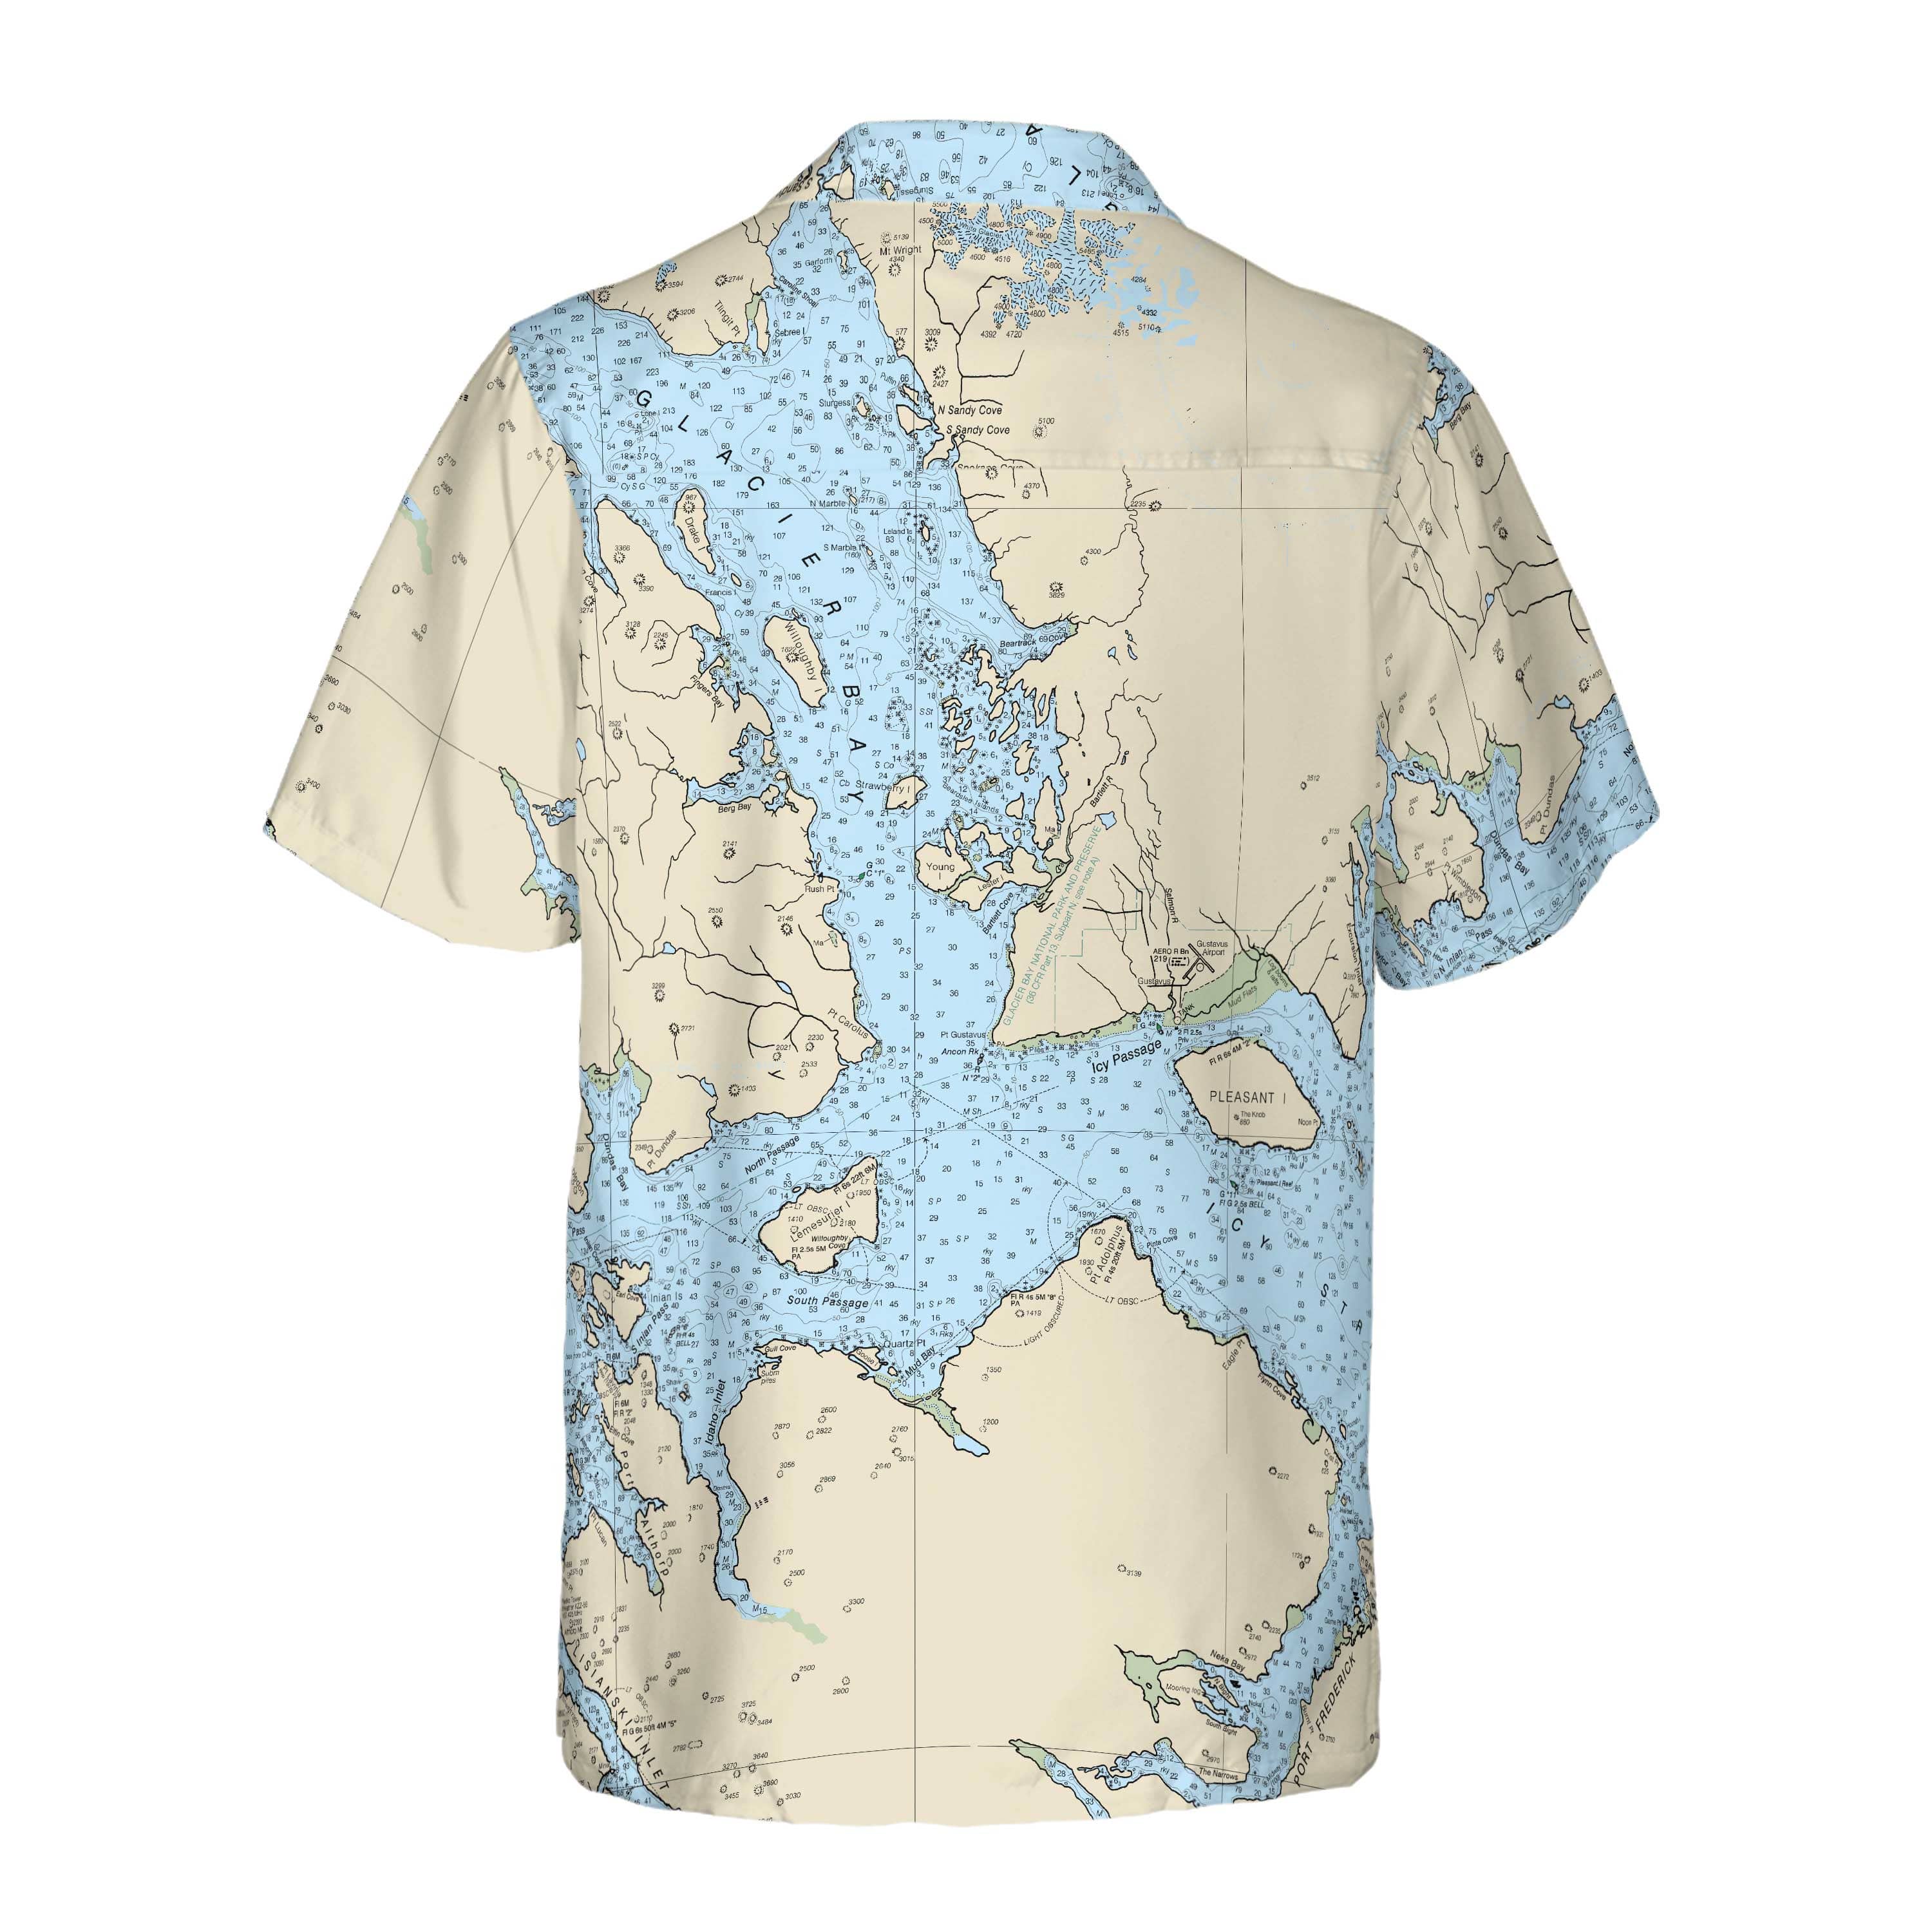 The Juneau Mariner Coconut Button Camp Shirt